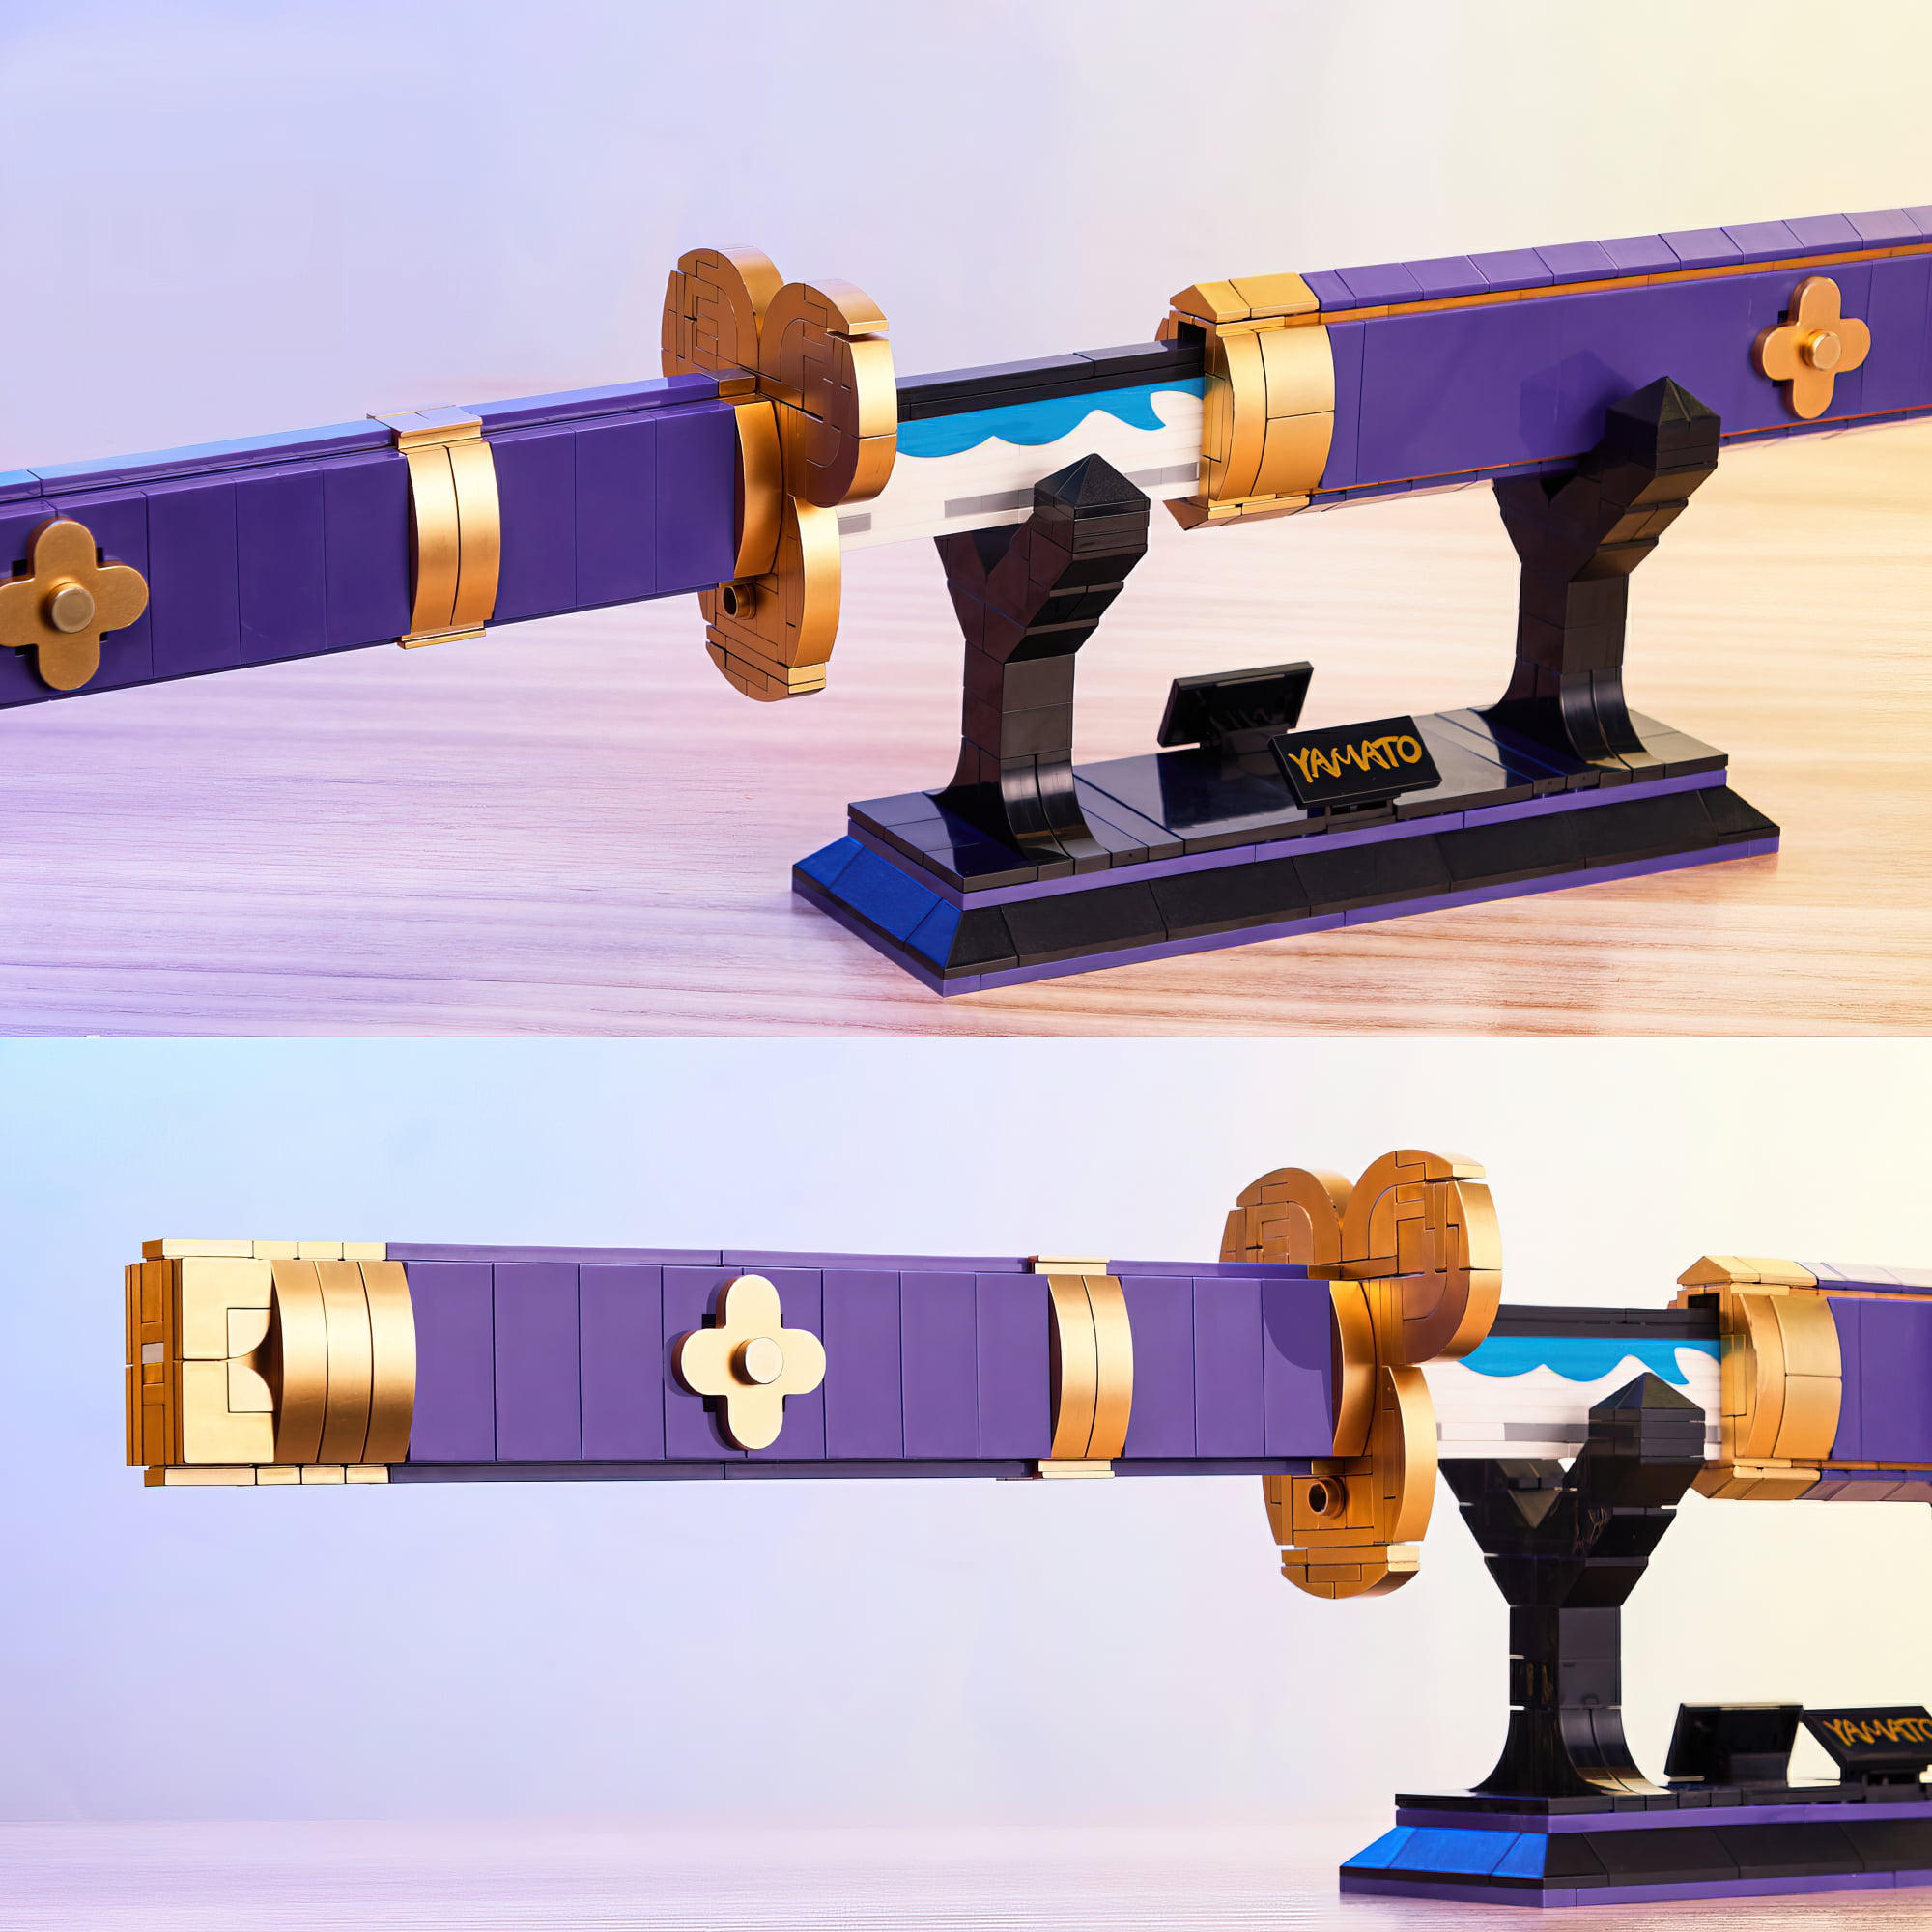 CHUANGPIN Zoro Anime Swords Building Set Compatible with Lego,Roronoa Zoro  Yamato Sword with Scabbard and Bracket,Handmade Purple Yama Enma Katana Toy